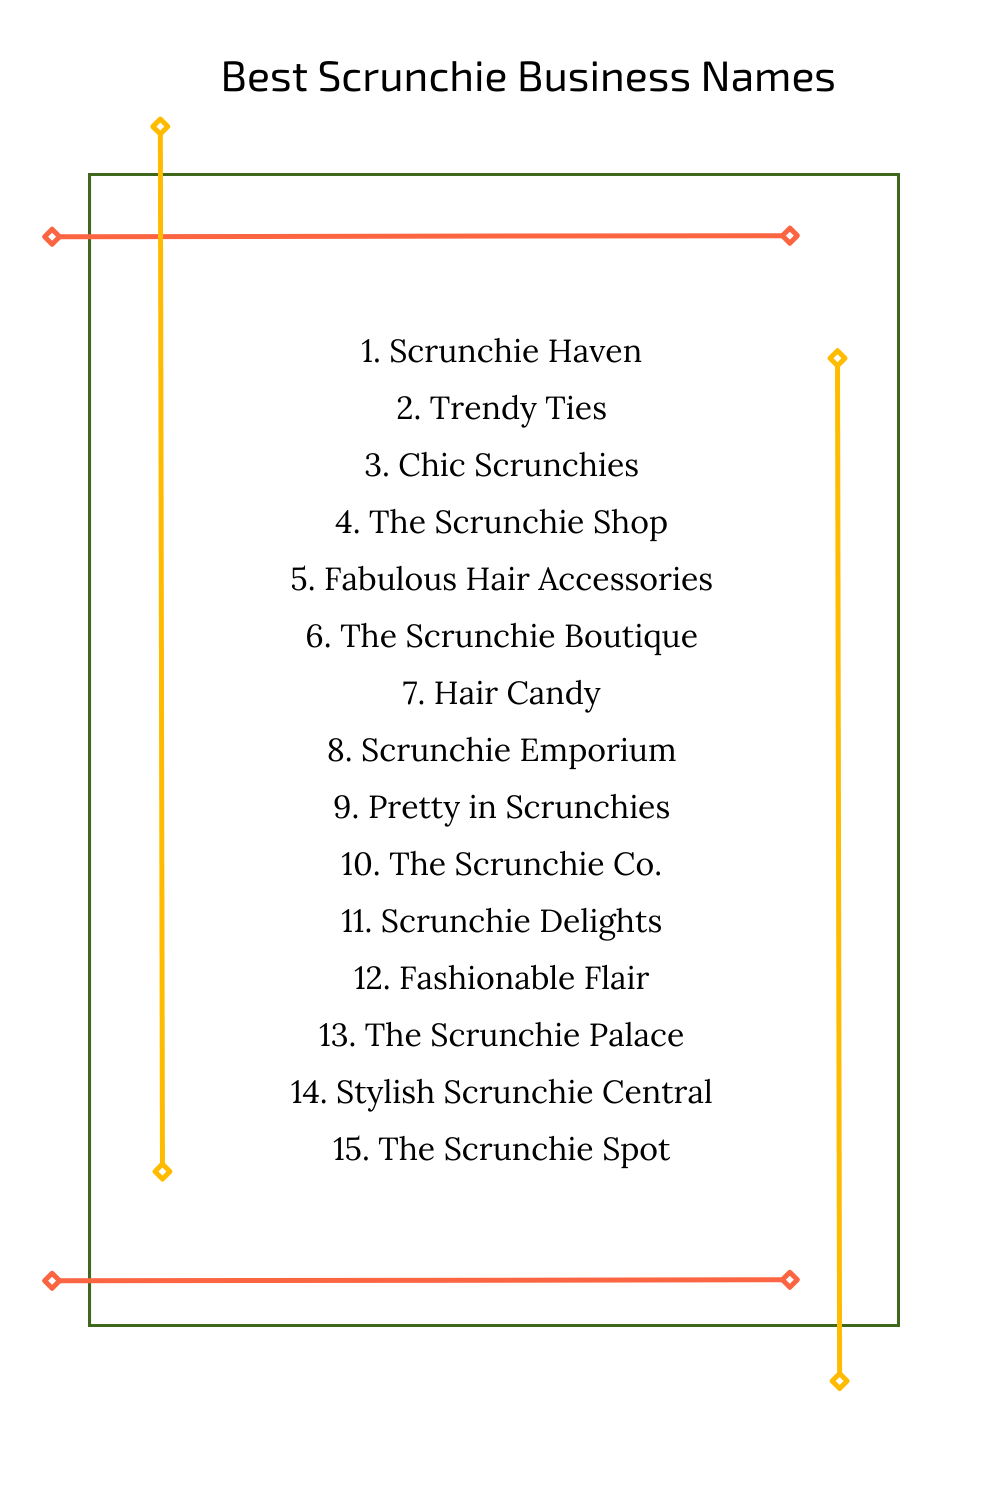 Best Scrunchie Business Names